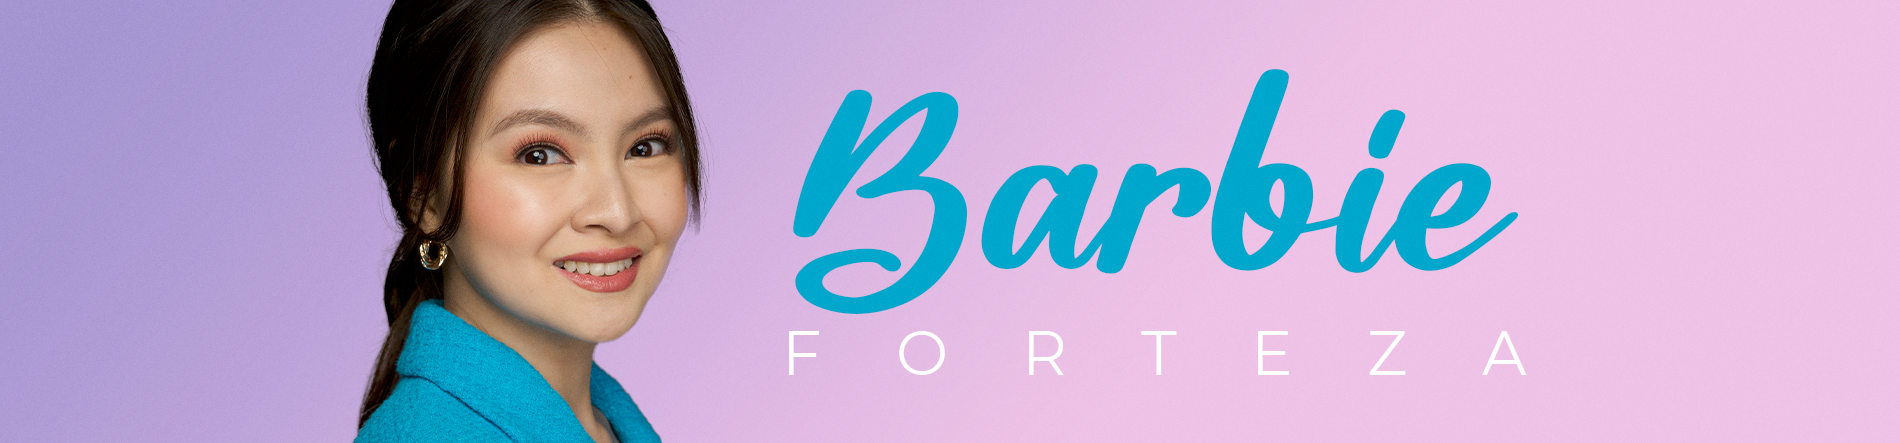 Barbie Forteza Desktop Banner